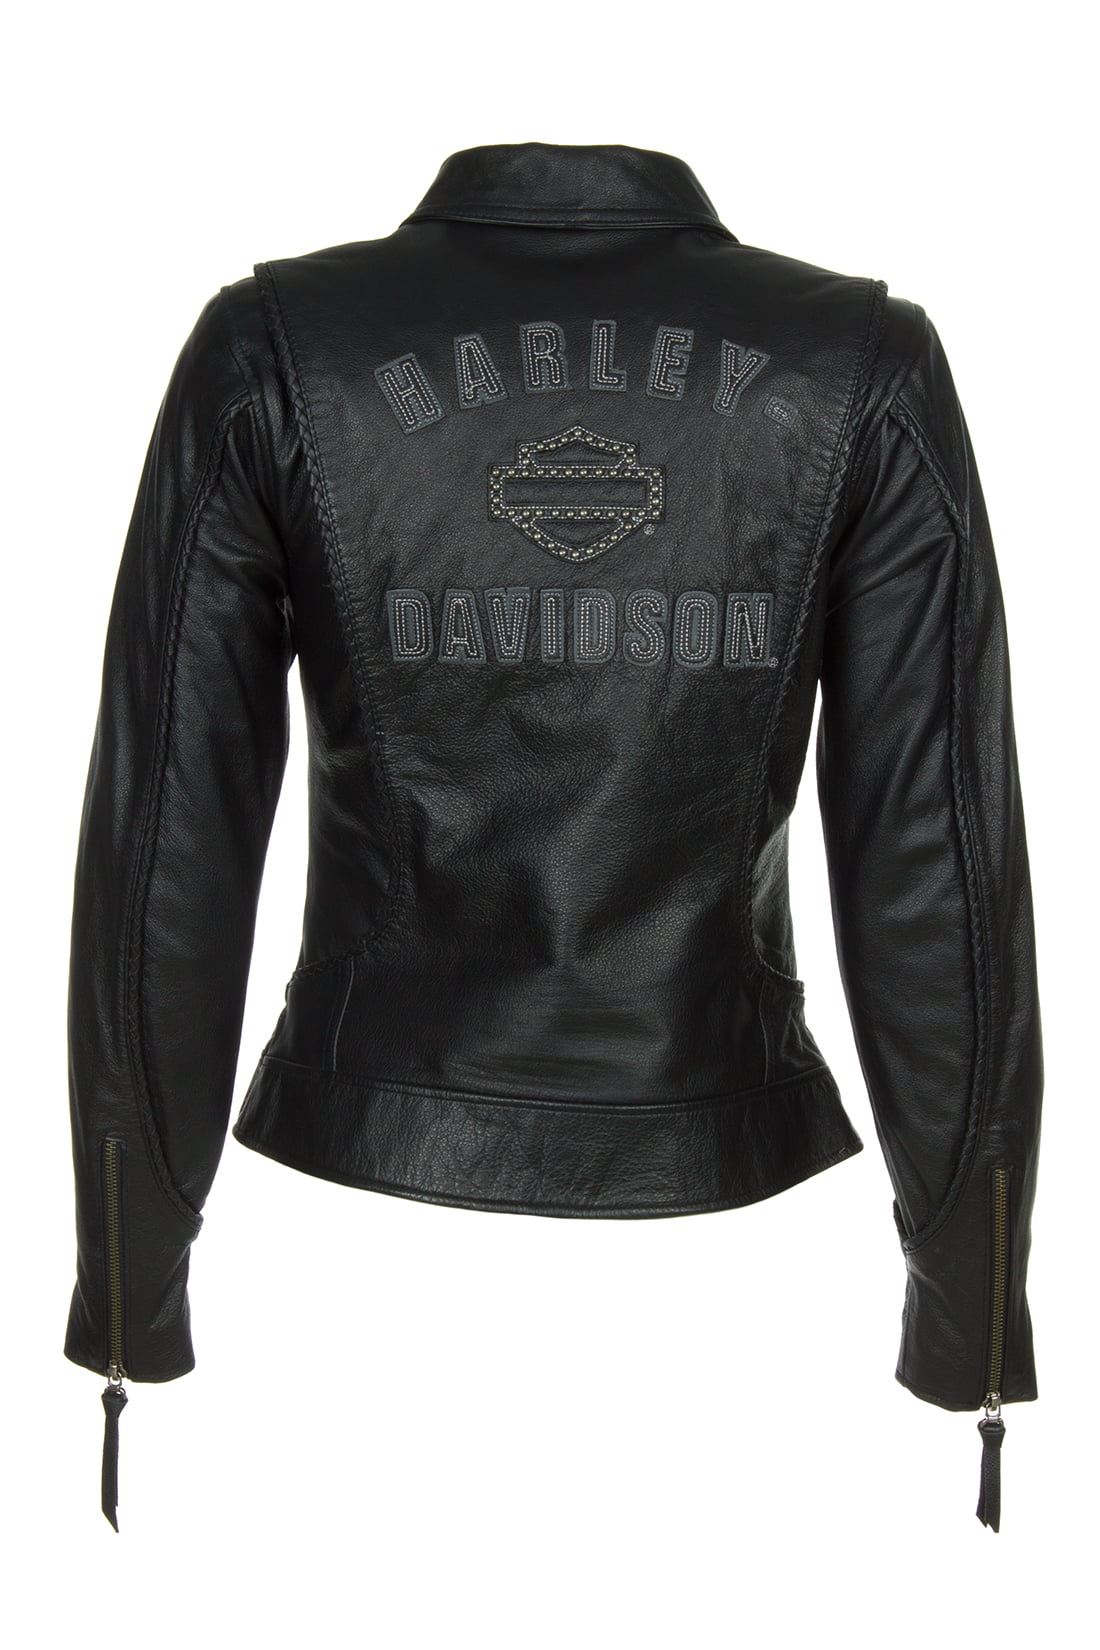 ladies leather harley davidson jacket, Off 78%, www.scrimaglio.com